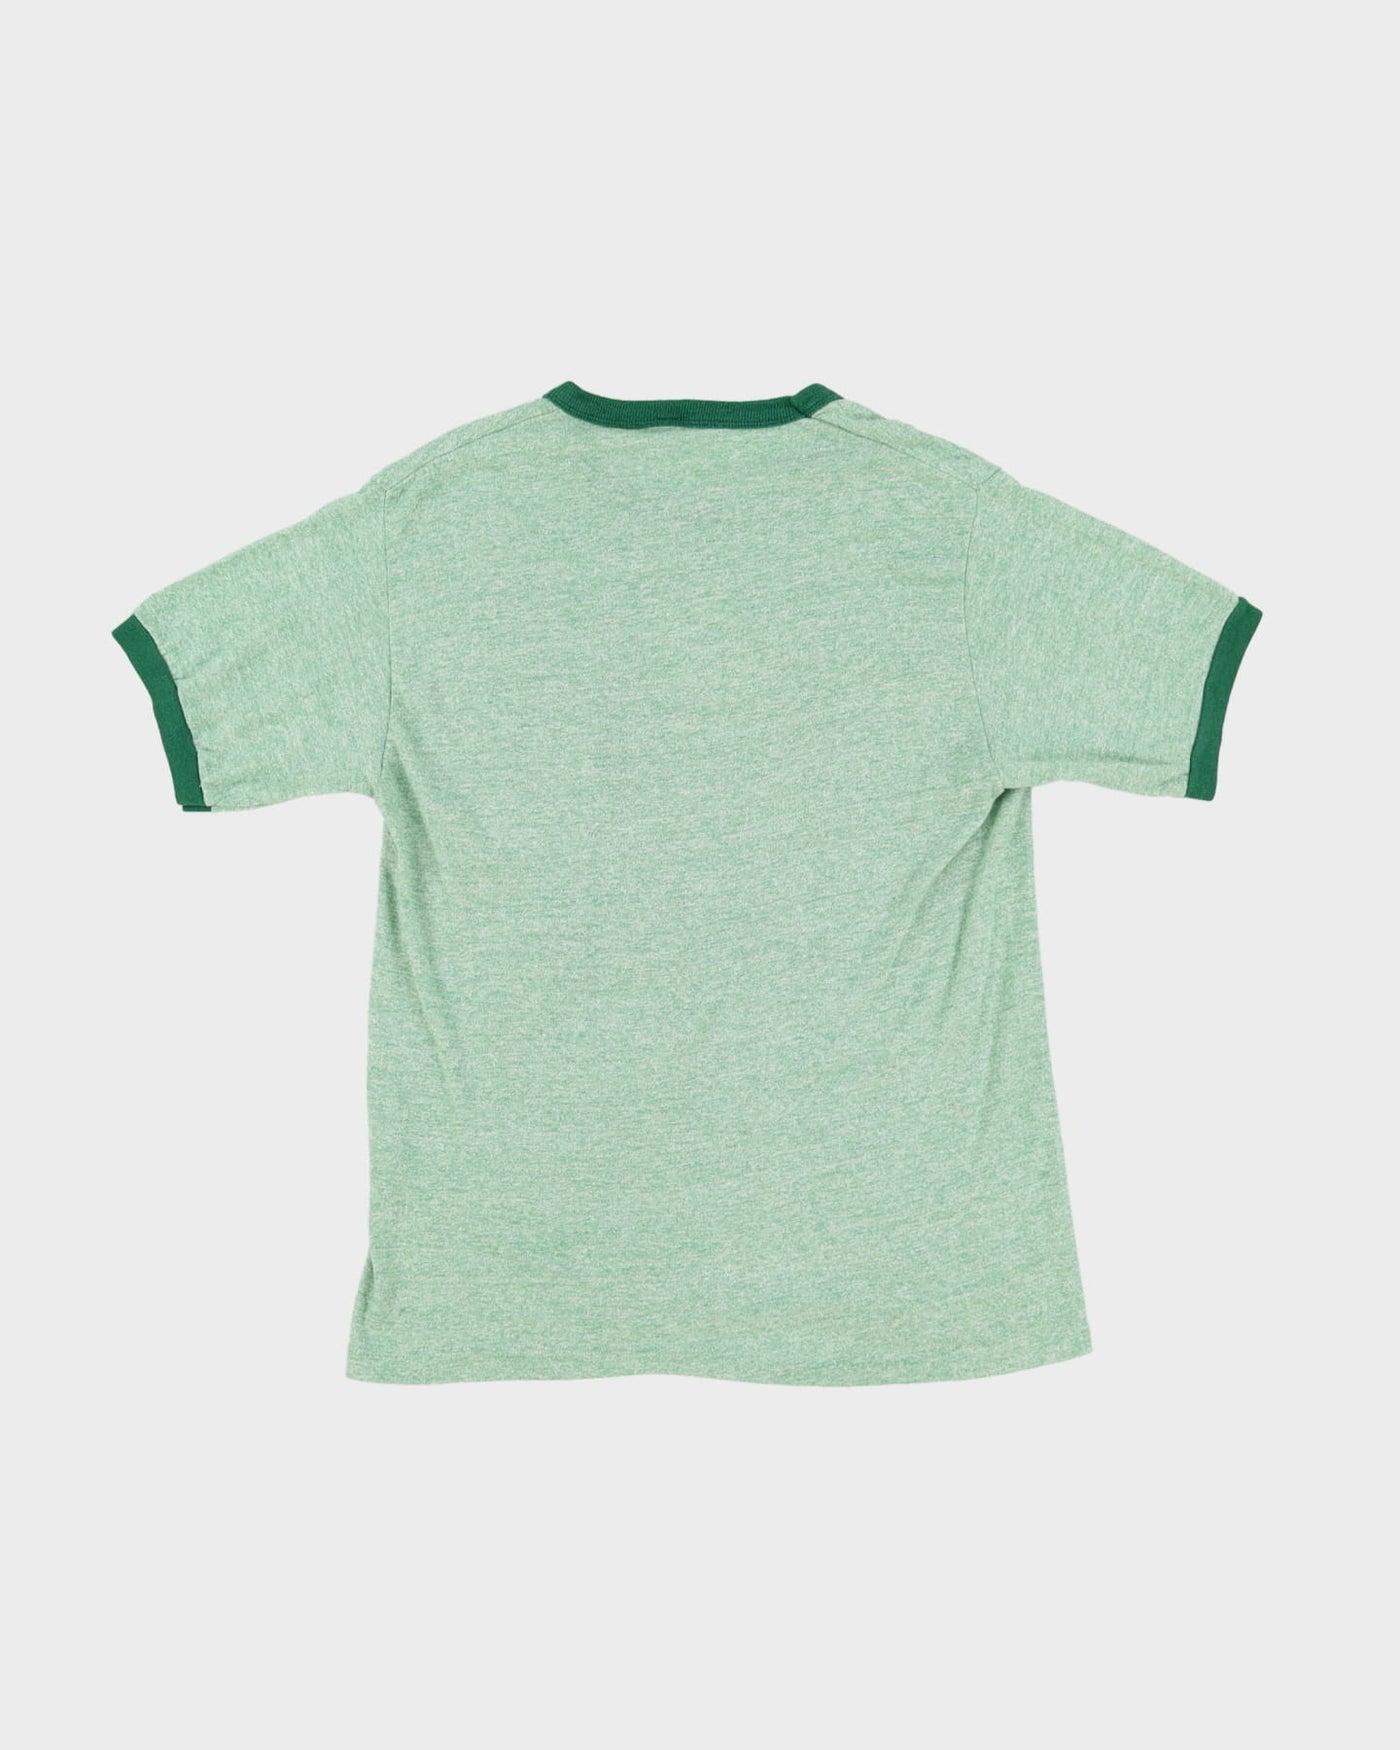 90s Adidas Green Ringer T-Shirt - M